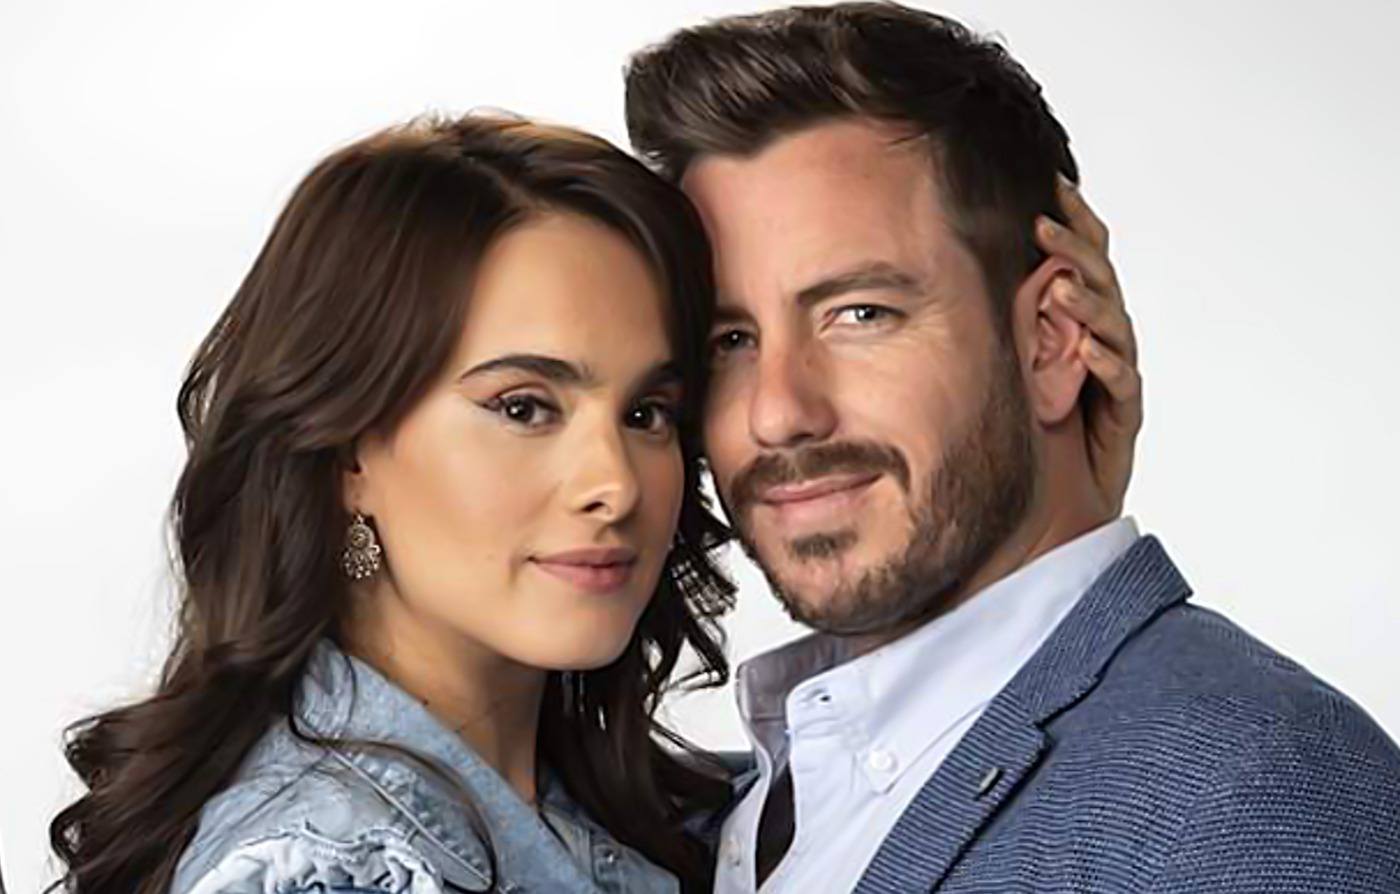 Gala Montes y Juan Diego Covarrubias, la pareja protagonista de la telenovela mexicana Diseñando tu amor